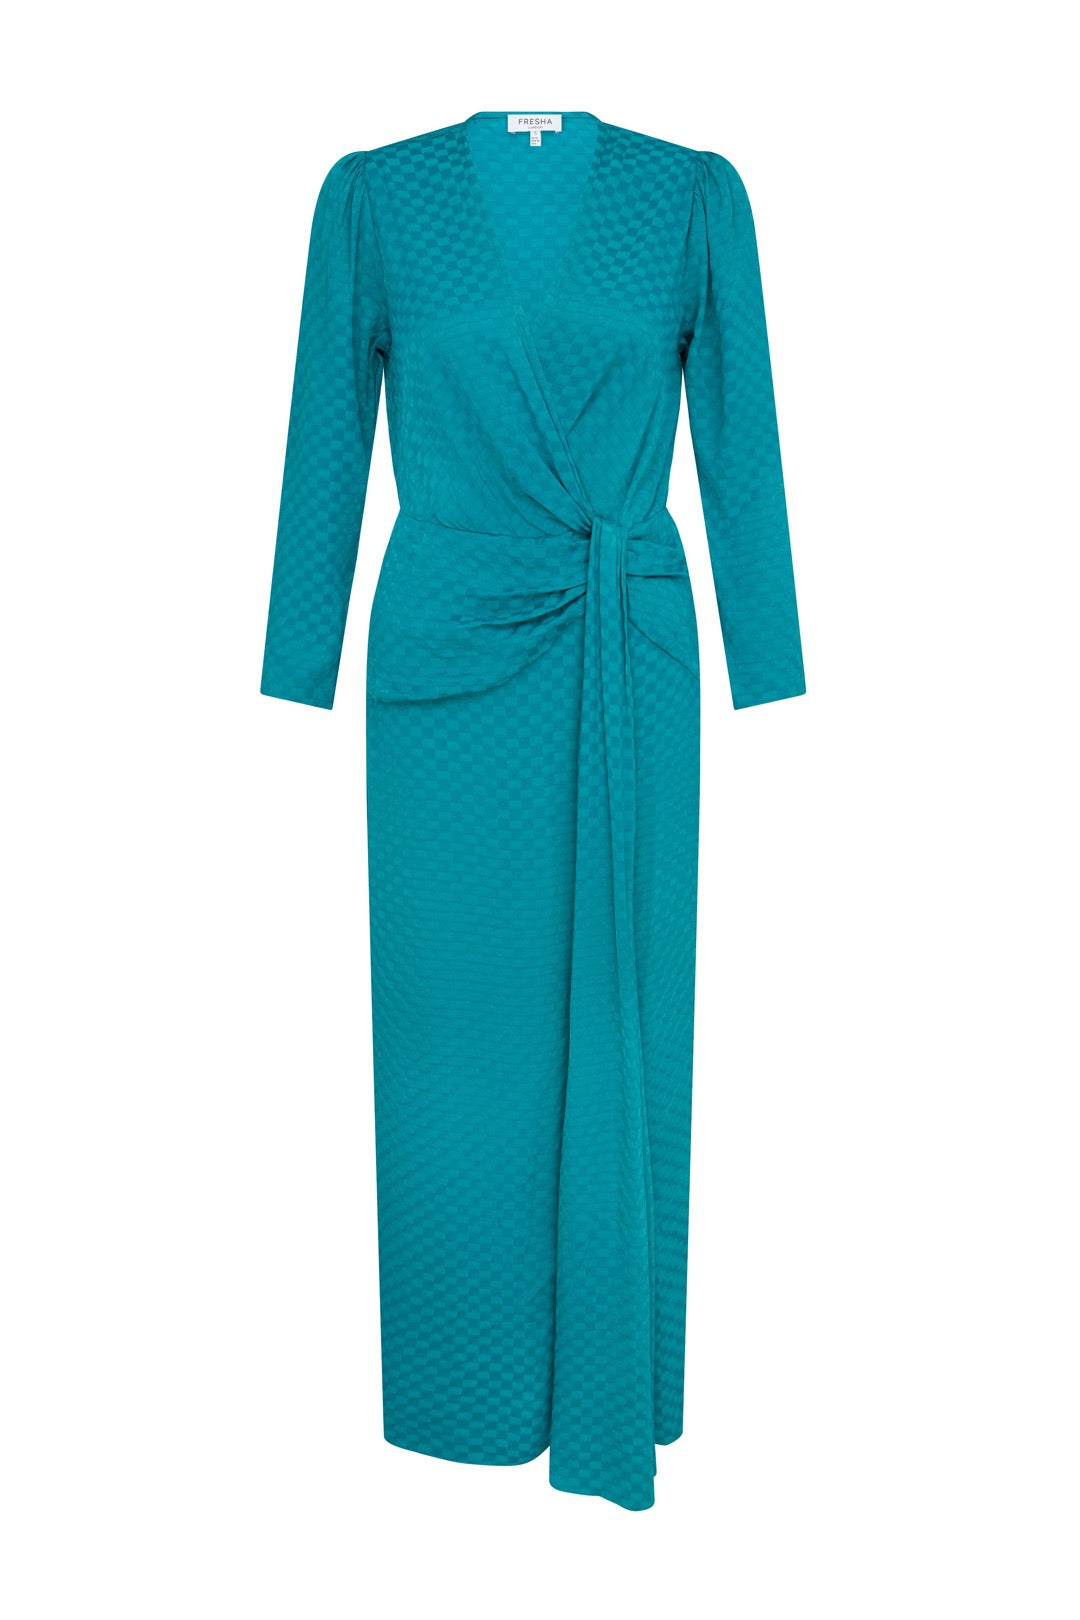 Fresha London Women's Green Riona Dress Teal Checkerboard In Blue